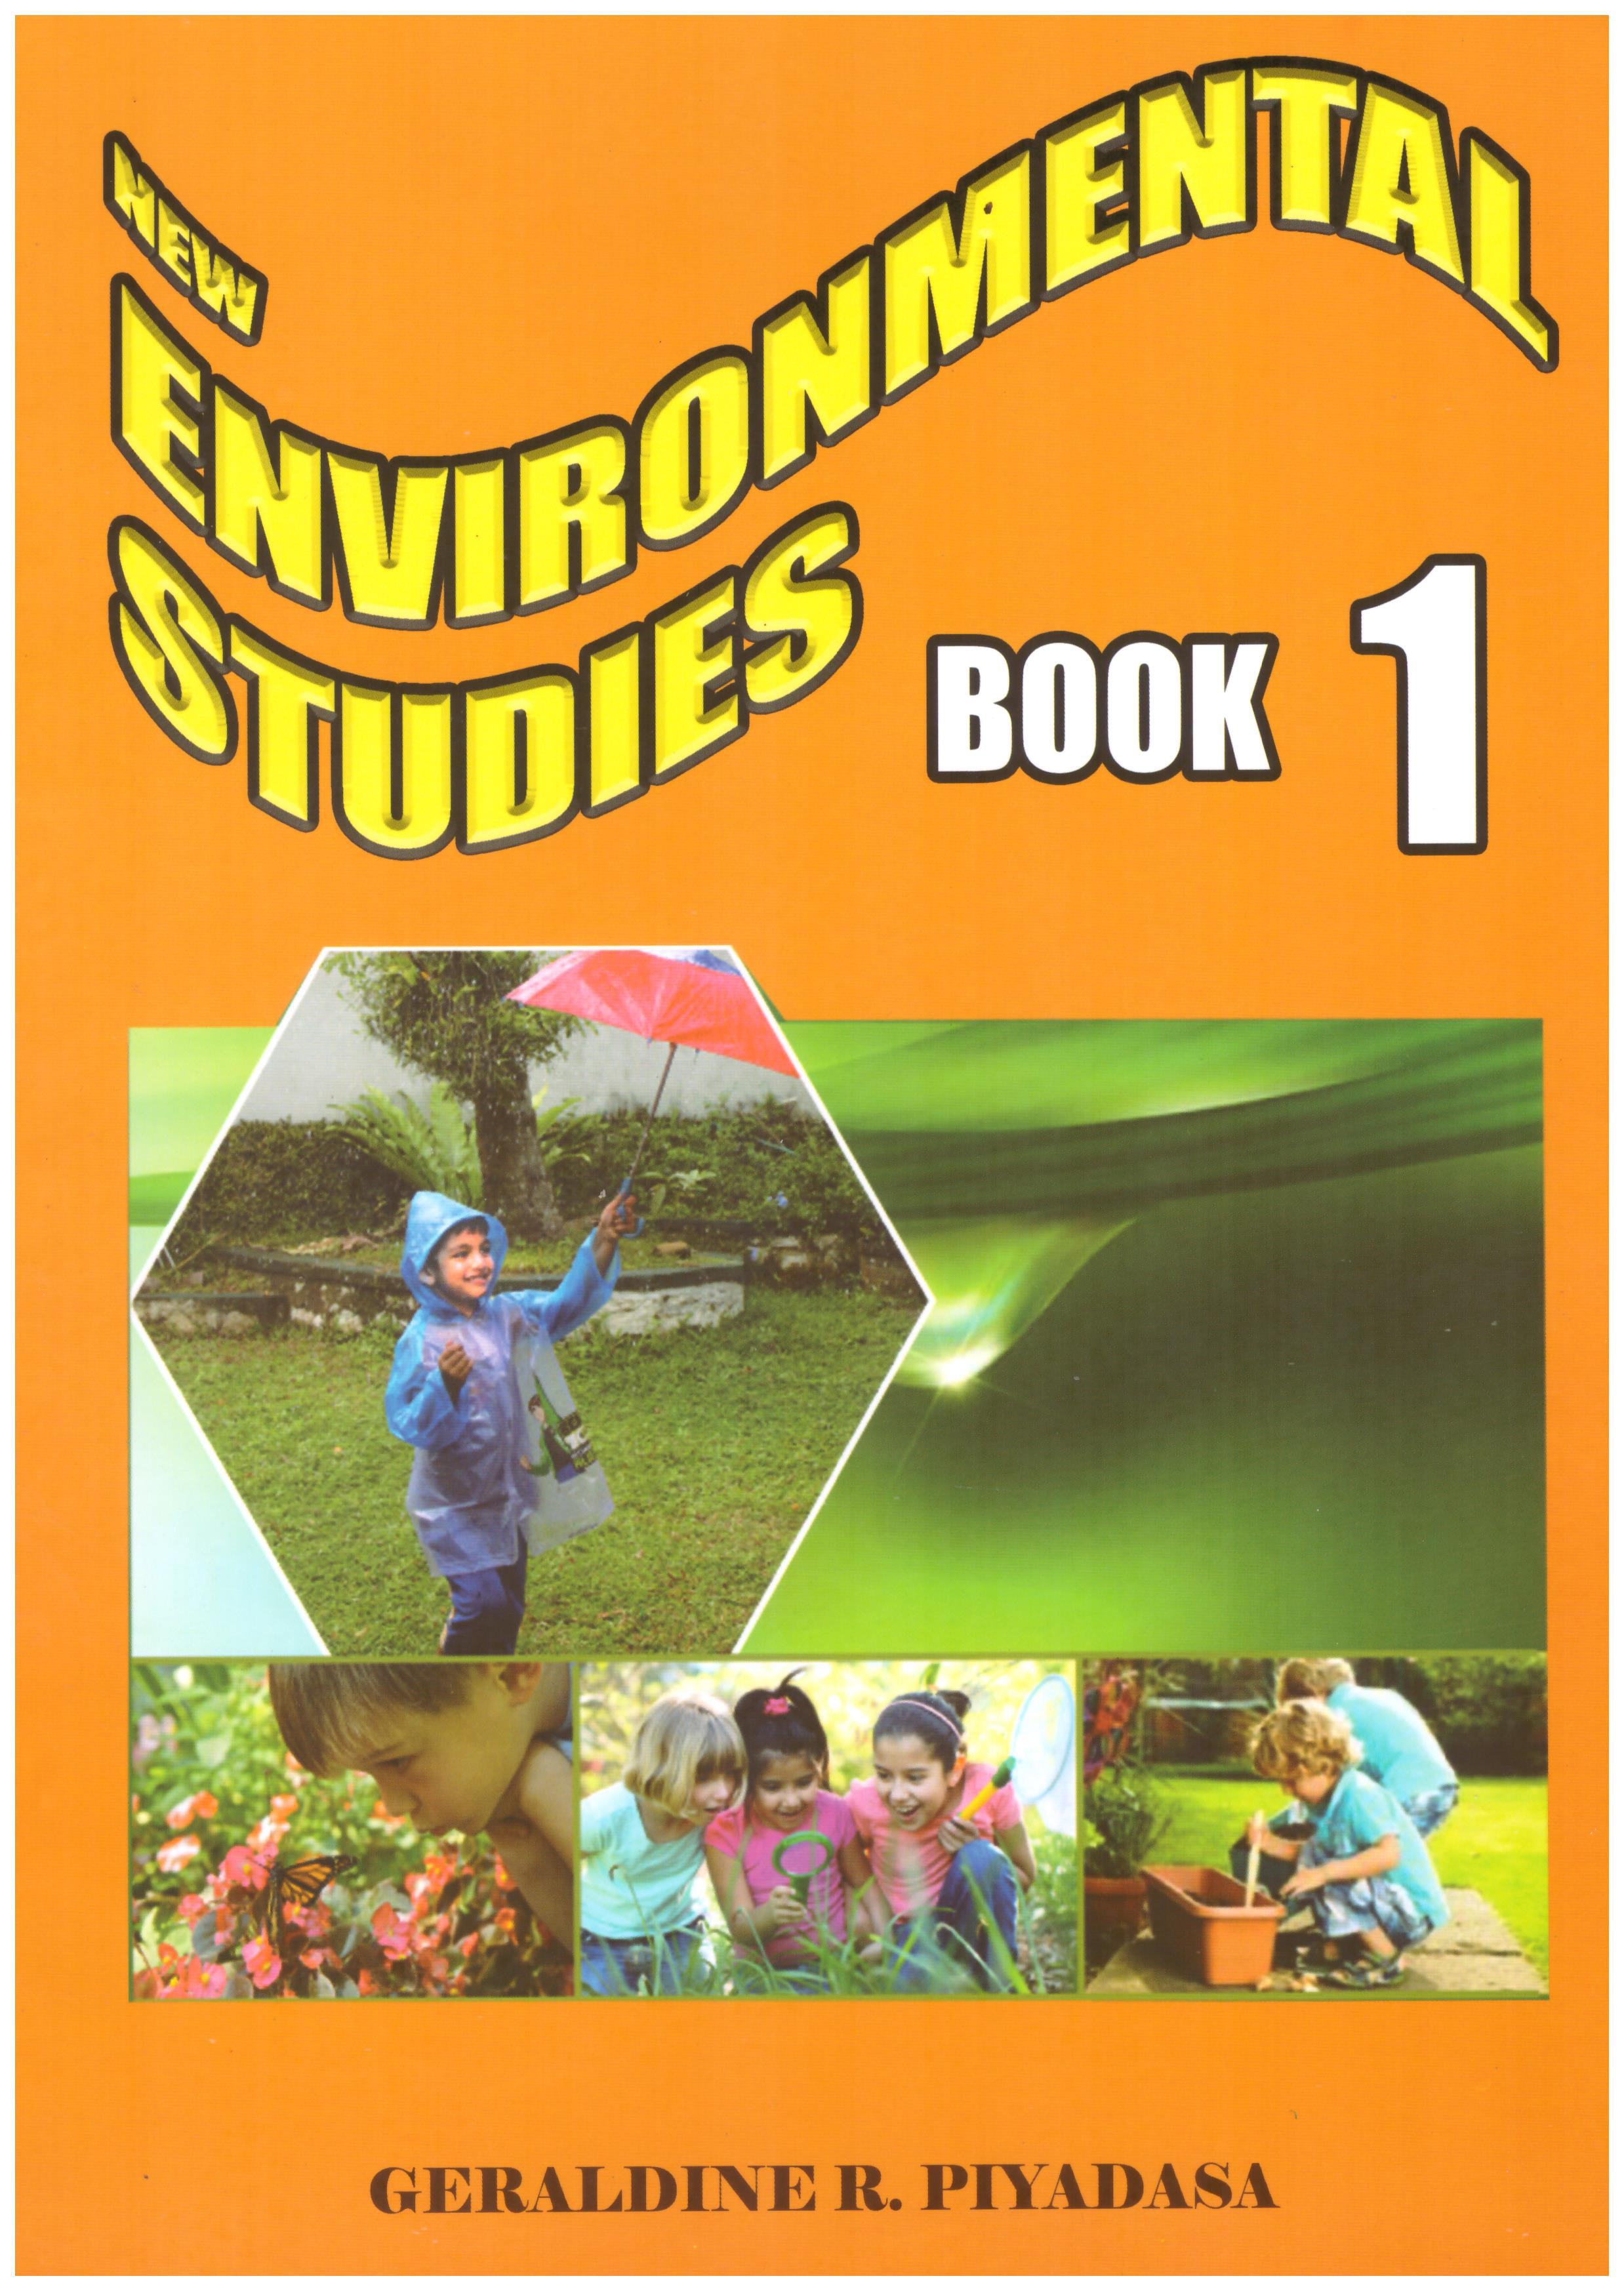 New Environmental Studies Book 1